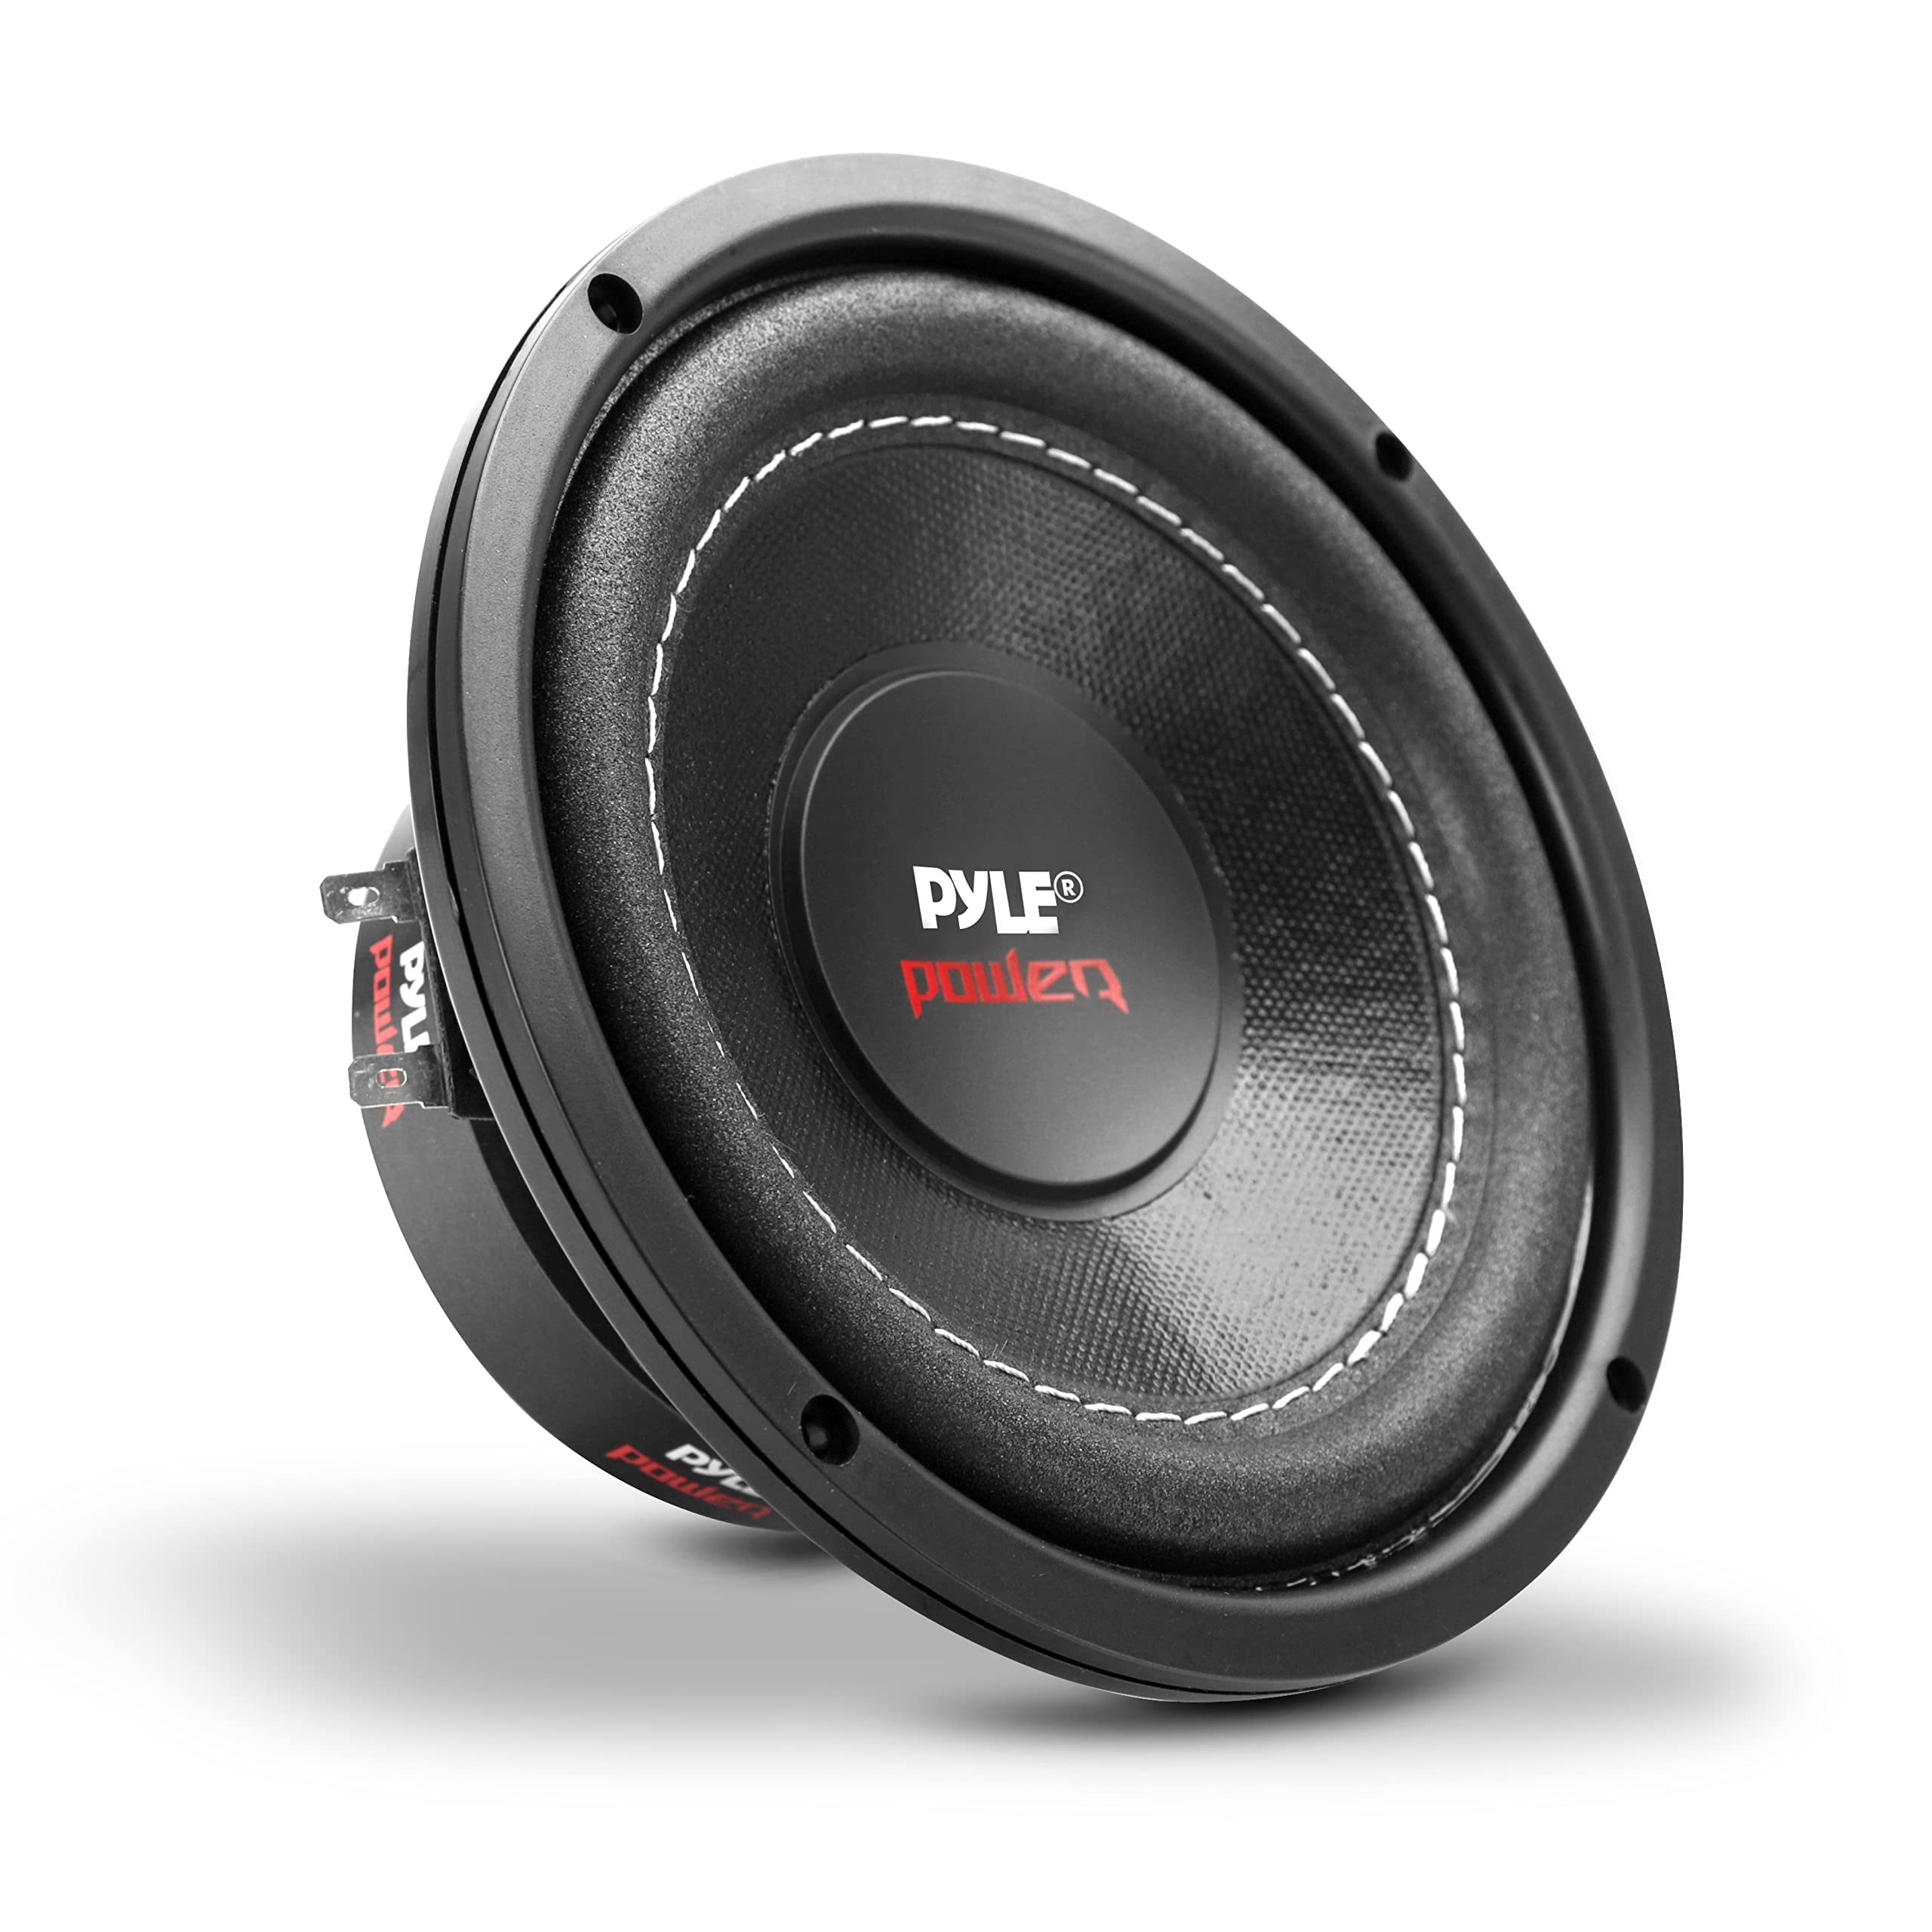 Pyle Car Vehicle Subwoofer Audio Speaker - 6.5 Non-Pressed Paper Cone, Black Plastic Basket, Dual Voice Coil 4 Ohm Impedance, 600 Watt Power, Foam Surround for Vehicle Stereo Sound System -PLPW6D